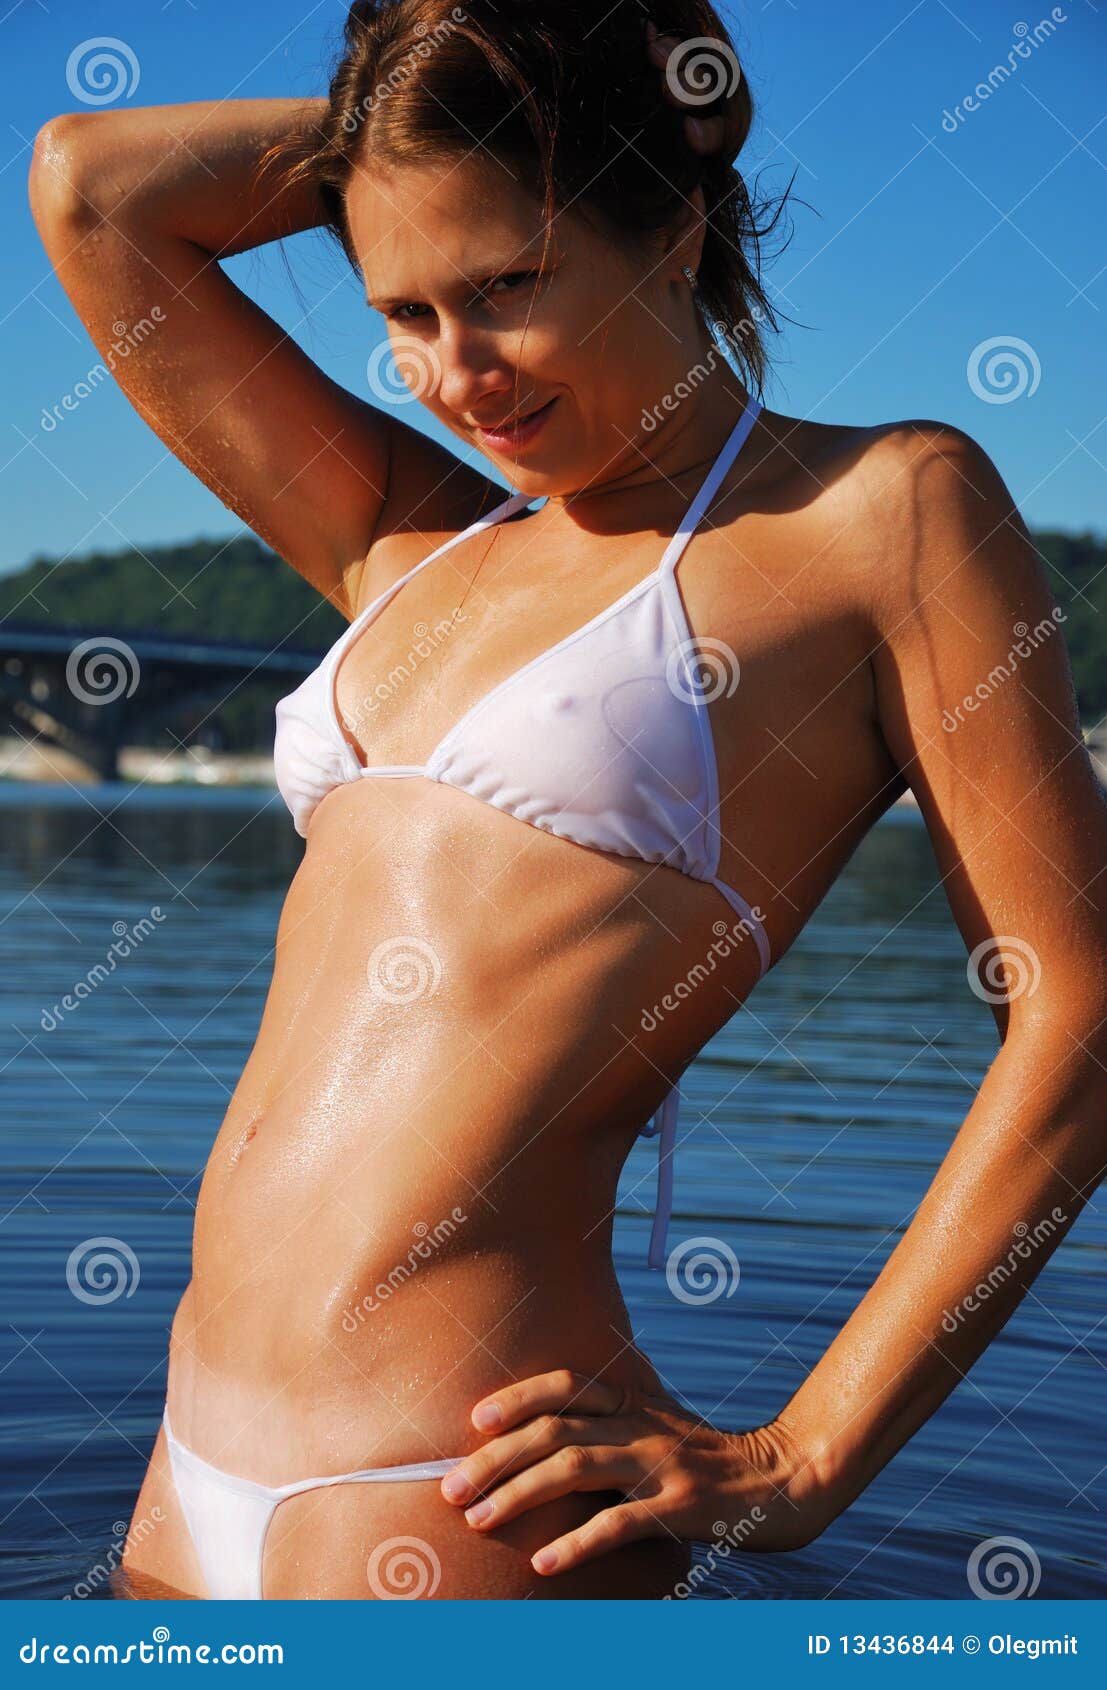 danilo panganiban recommends transparent when wet bikini pic